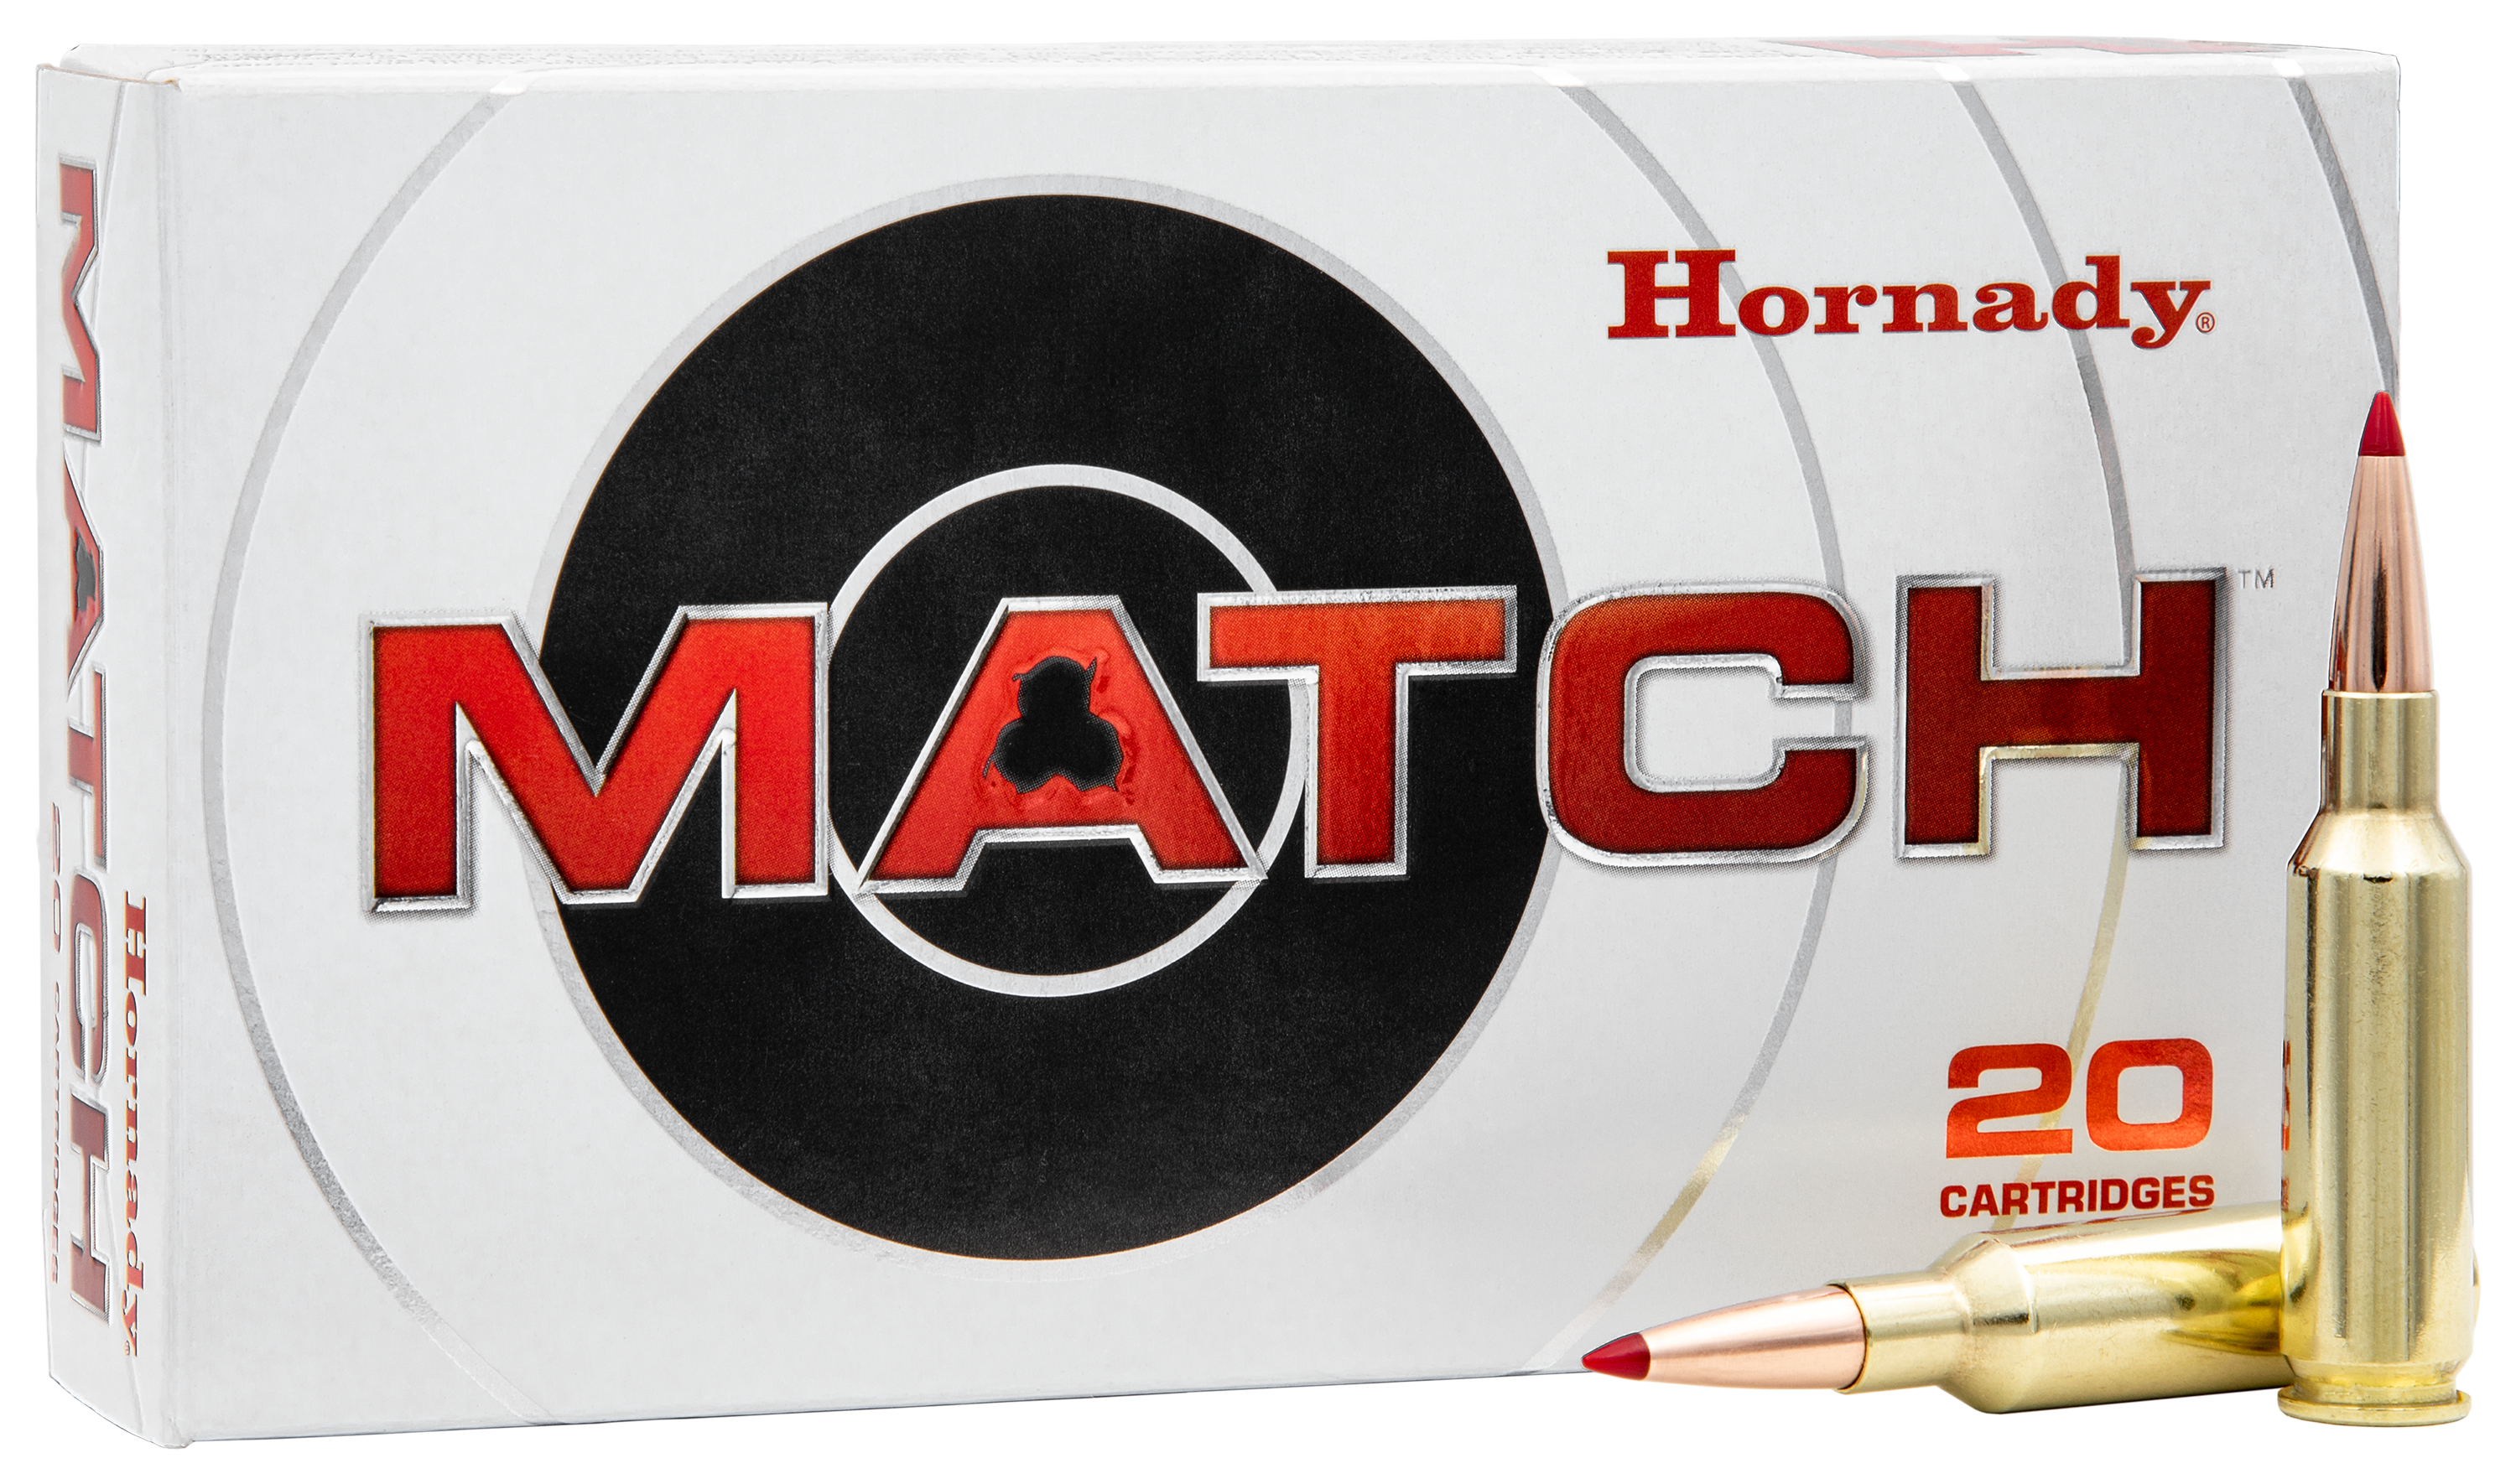 Hornady ELD Match .260 Remington 130 Grain Centerfire Rifle Ammo